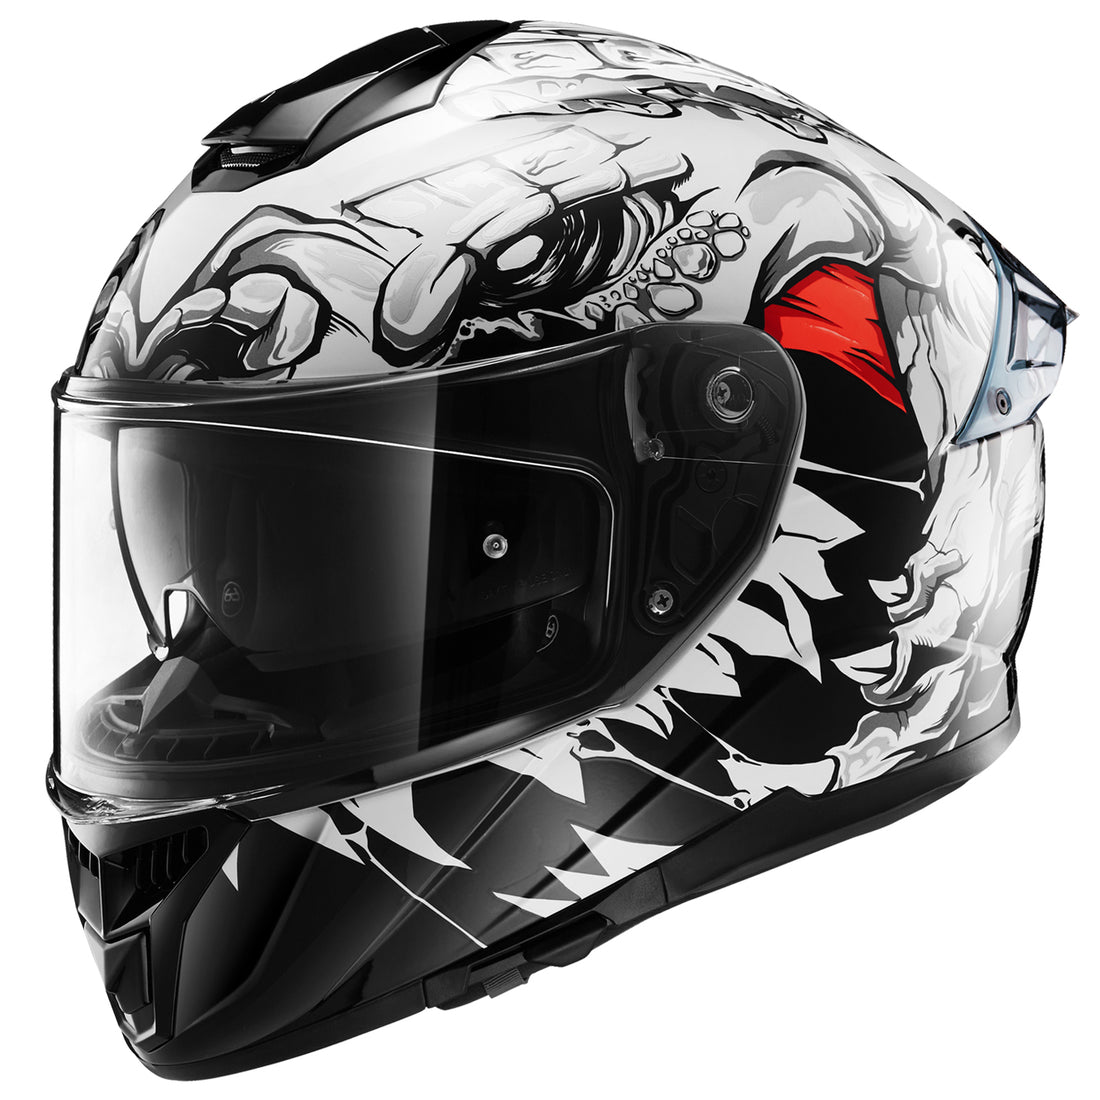 ILM Full Face Motorcycle Helmet Model 861A